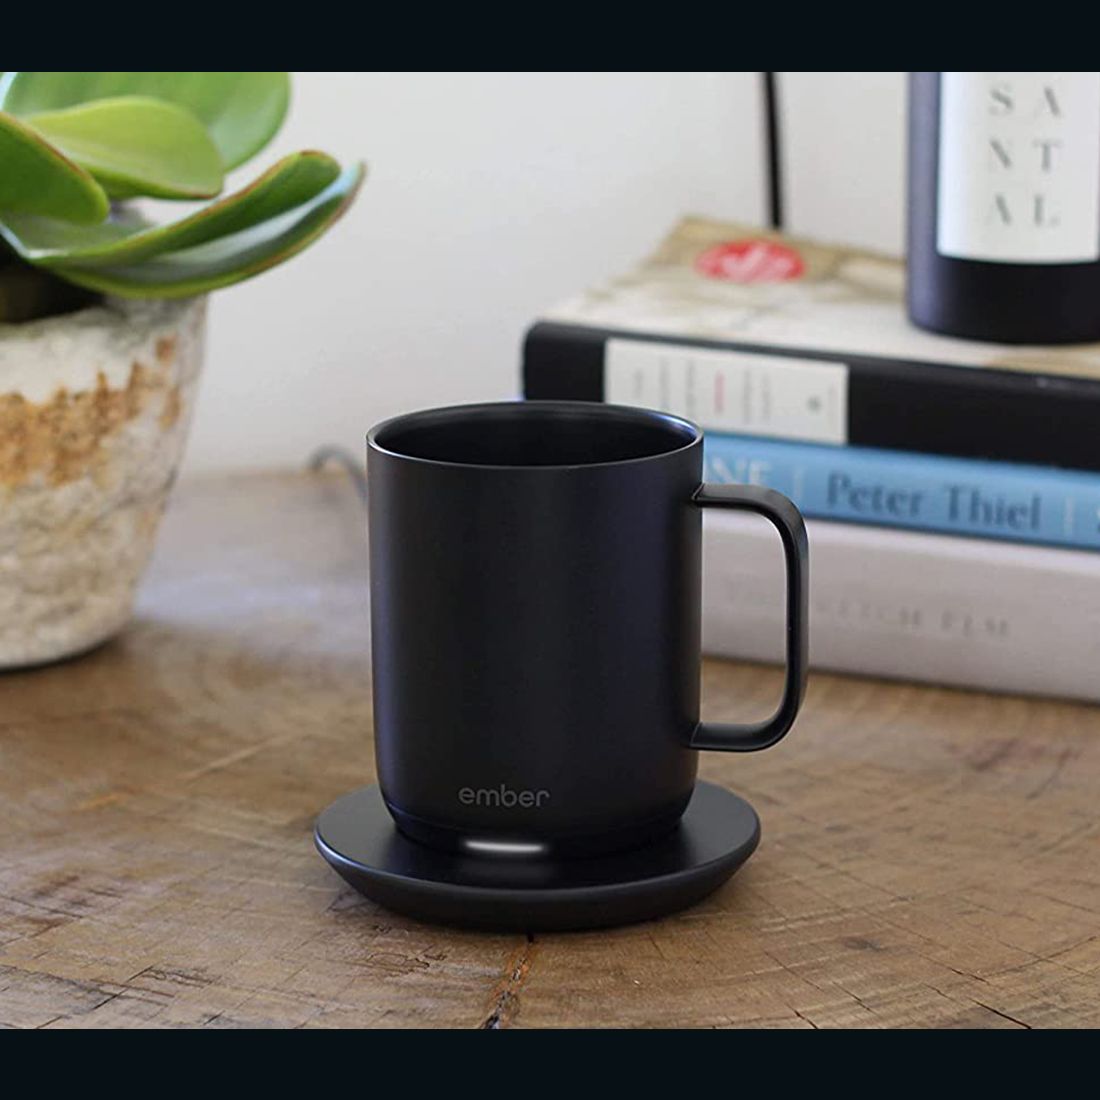 Ember Mug sale: Save on a rechargeable mug that keeps your drinks